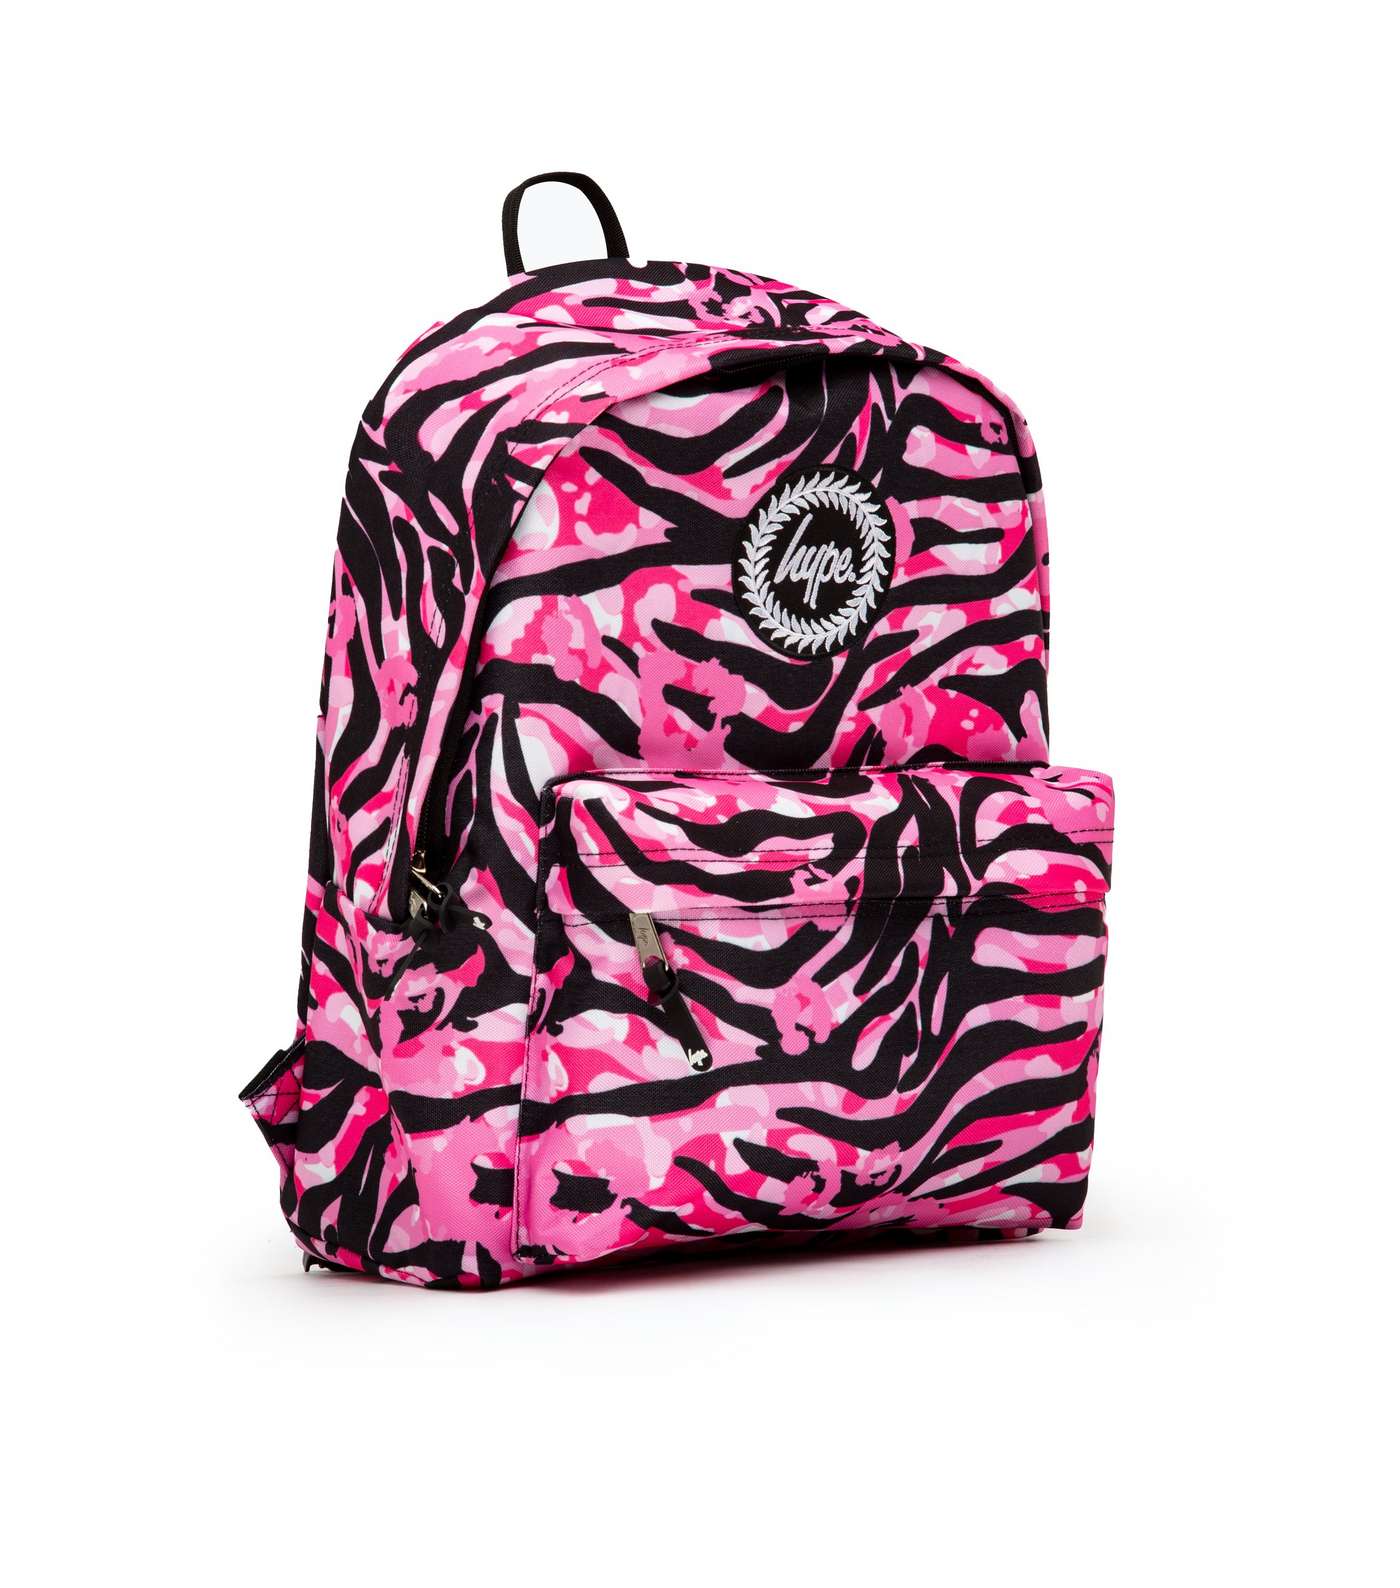 HYPE KIDS Pink Zebra Print Backpack Image 2